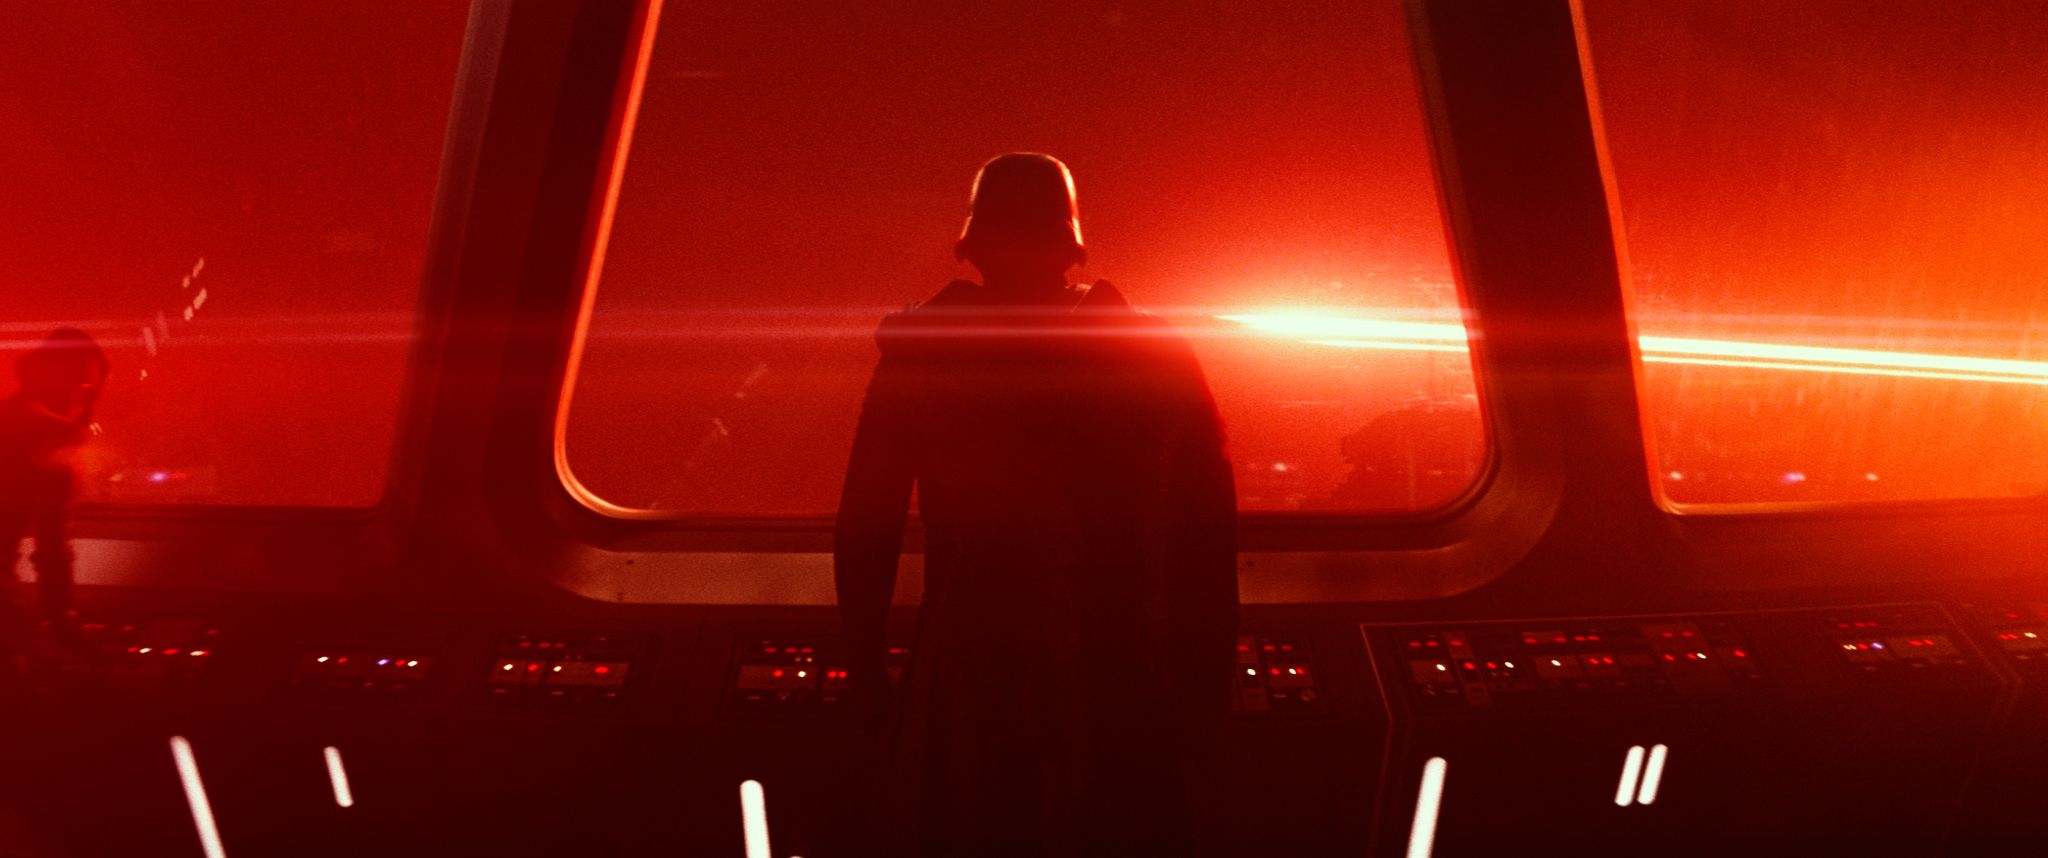 Star Wars Episode VII The Force Awakens Full HD Papel de Parede 